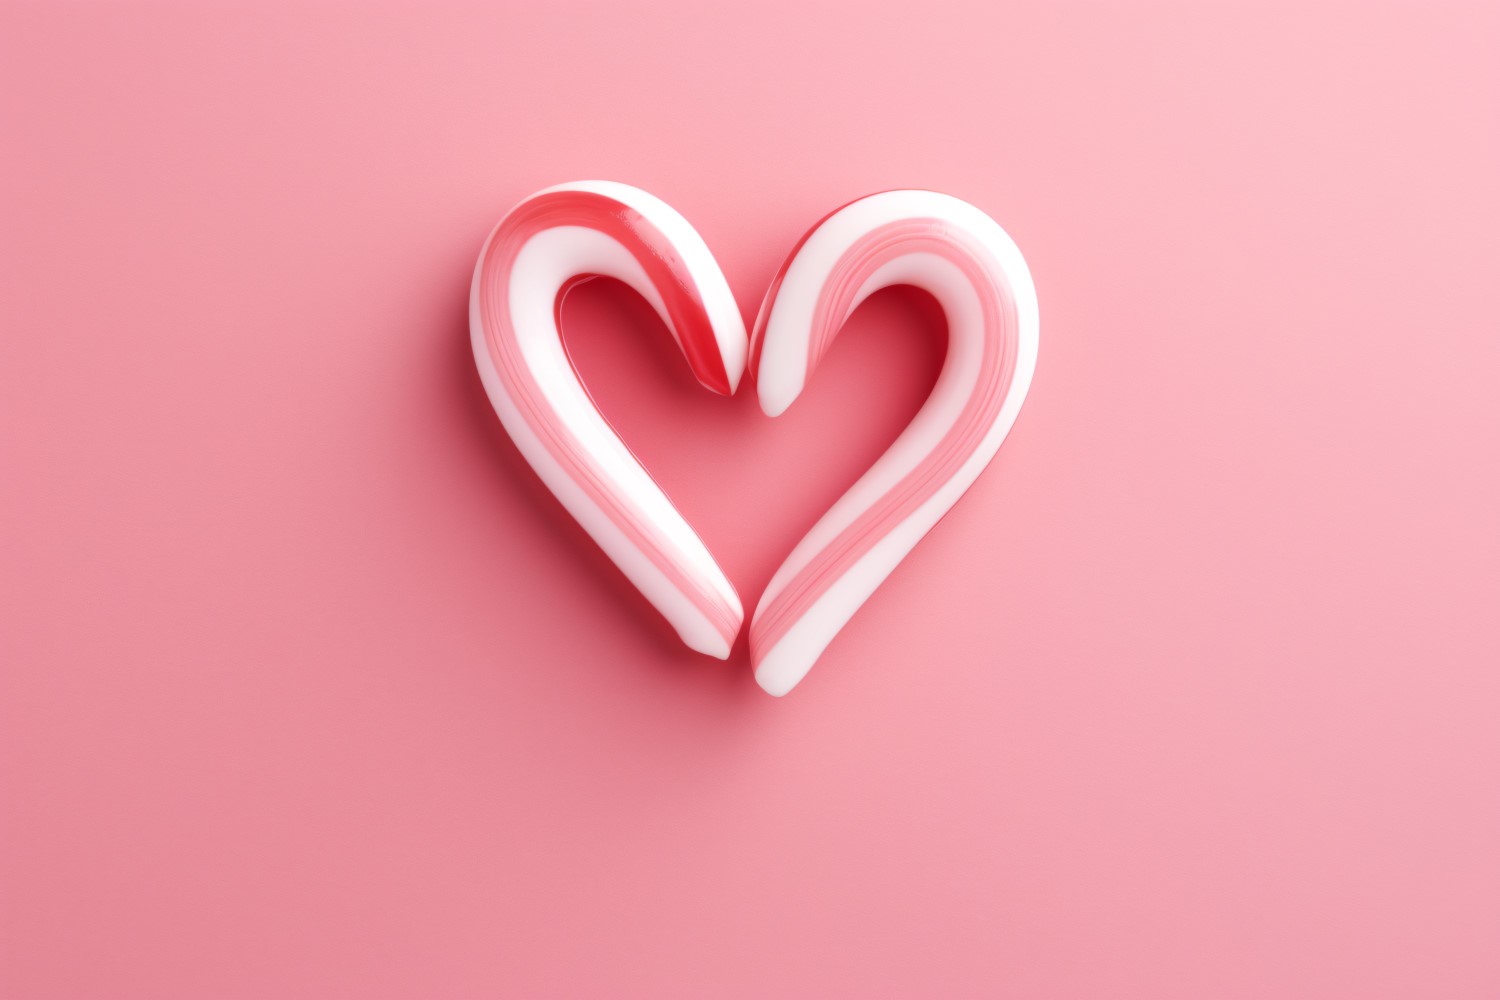 Candy Hearts Valentine day illustration 11